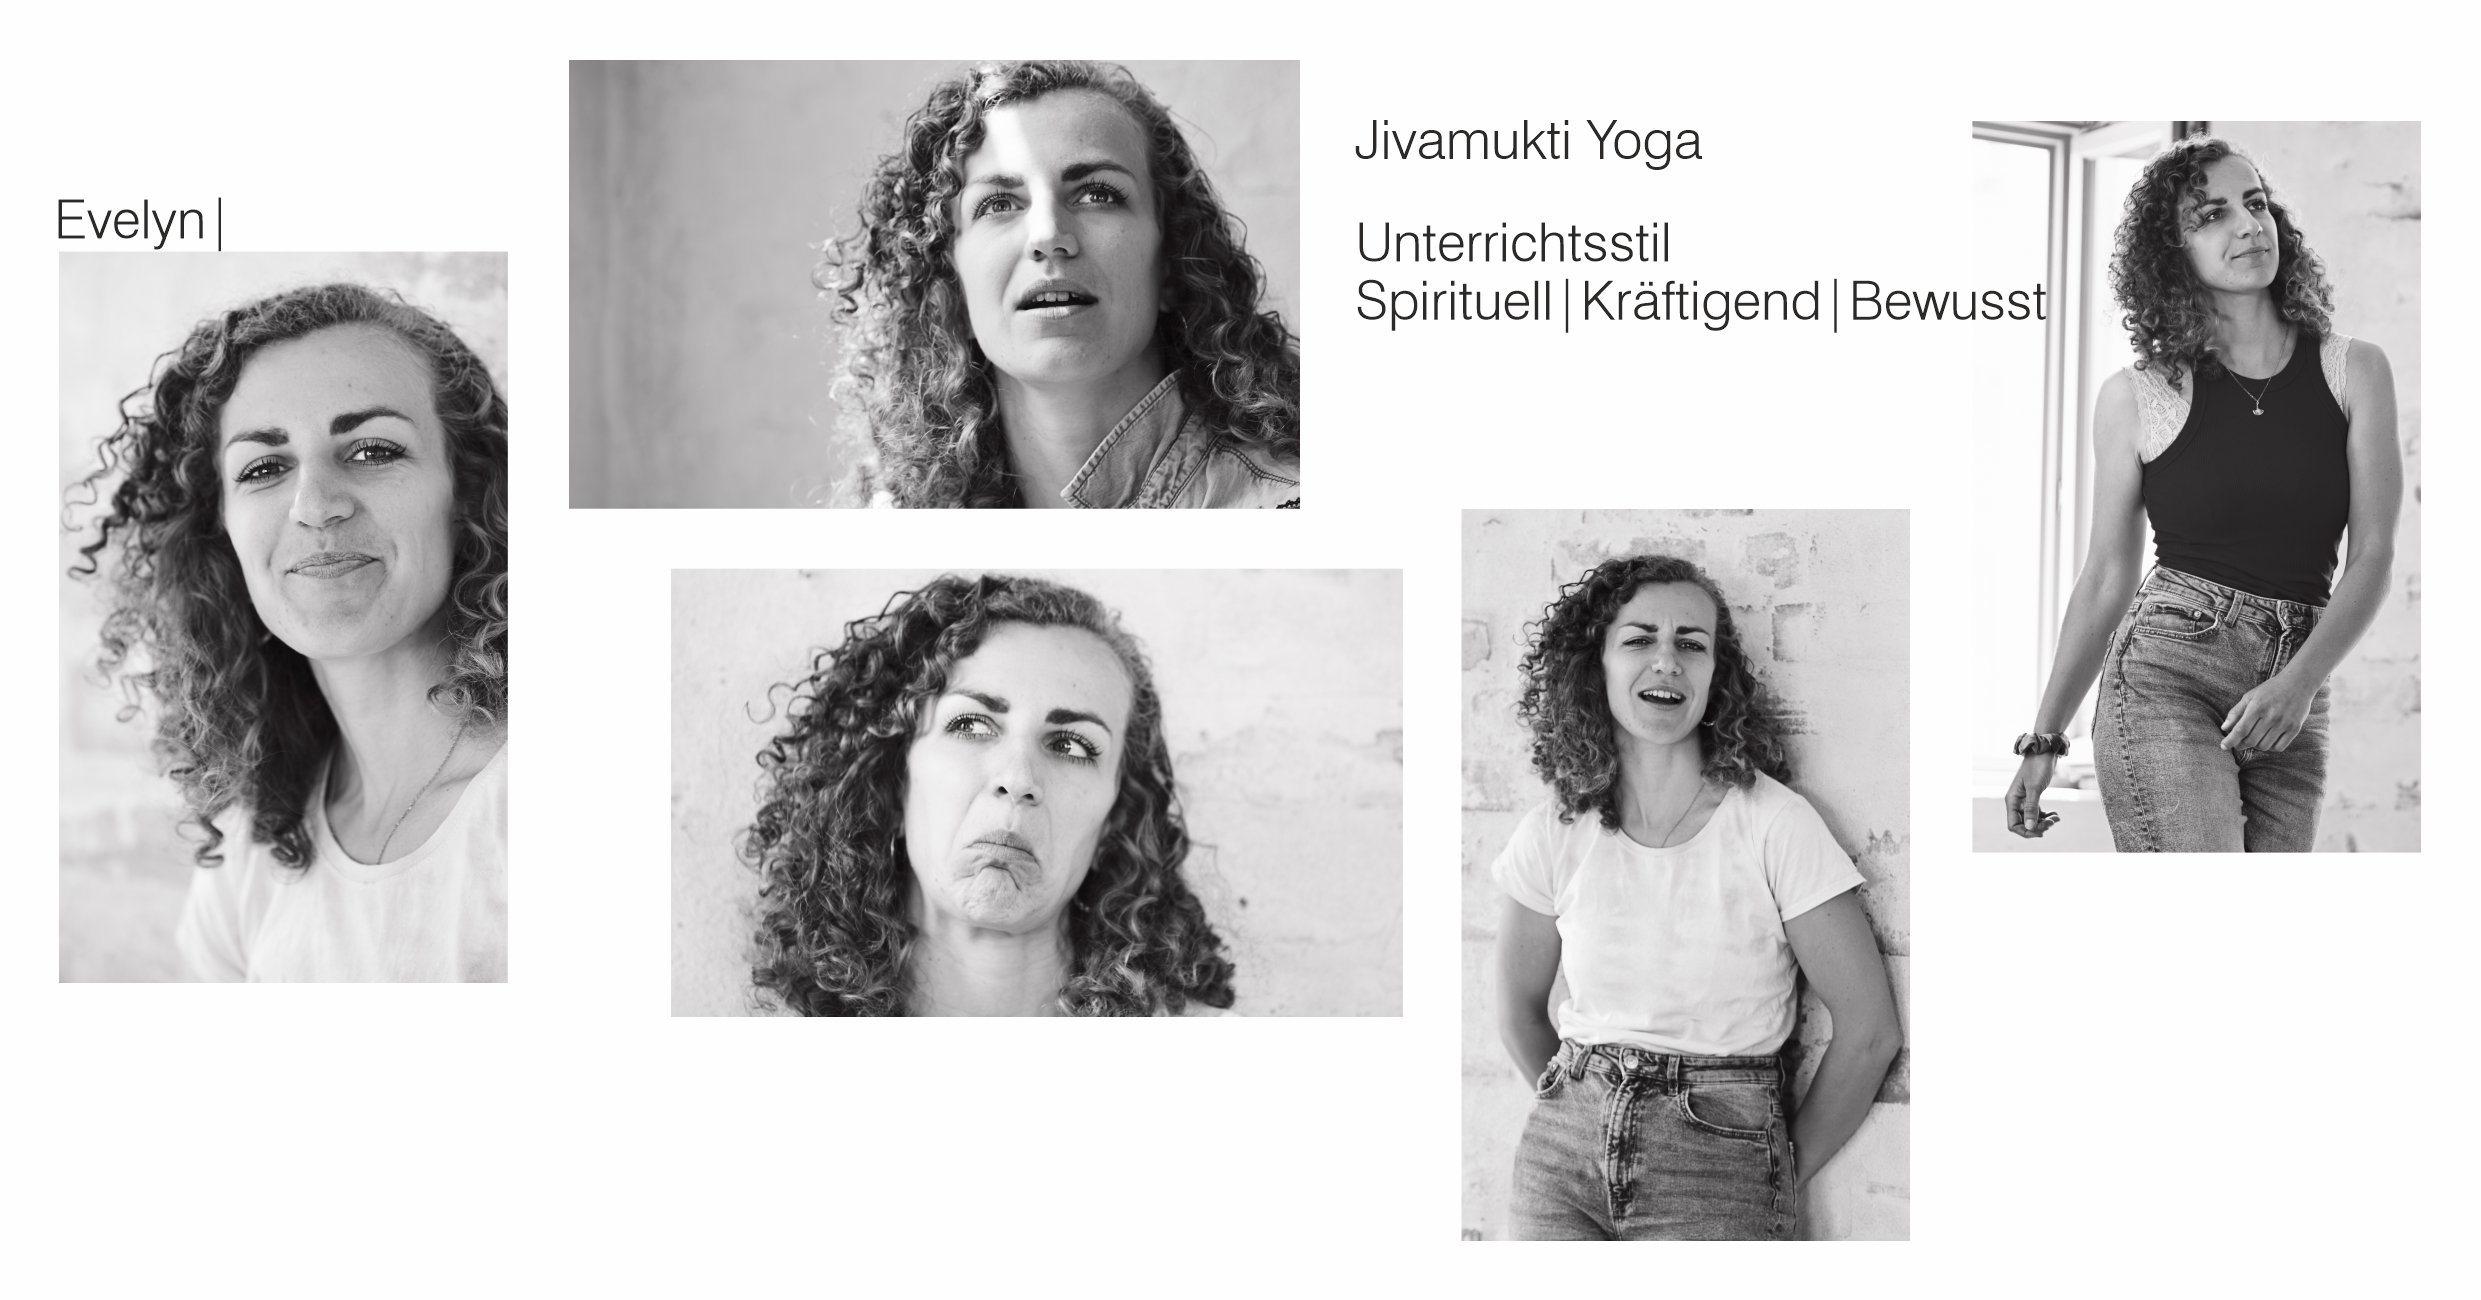 Ute Stephan Yoga Studio Plagwitz, Jivamukti Yoga, Evelyn Lehrer.jpg